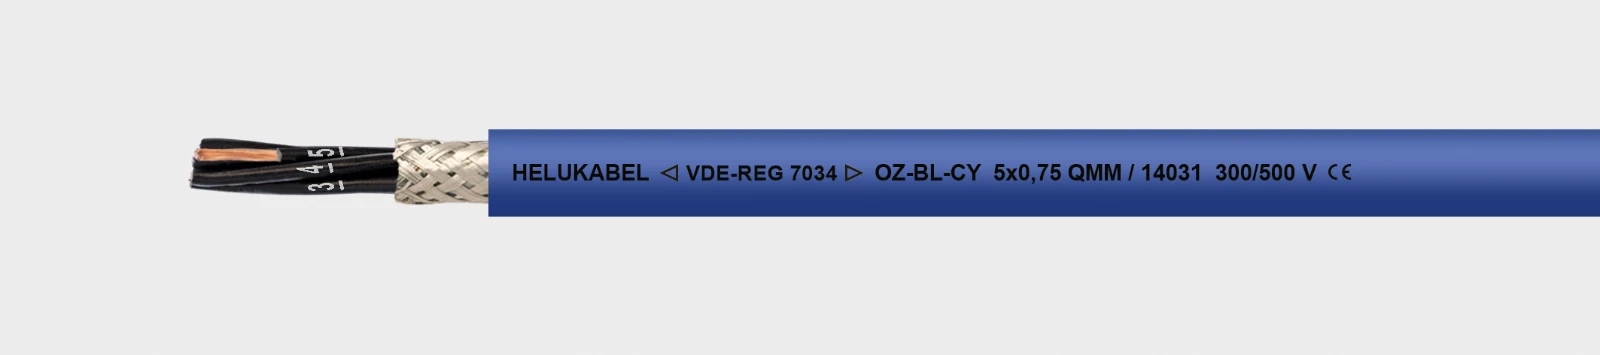 Helukabel Voedingskabel < 1 kV, voor beweegbare toepassingen OZ-BL-CY